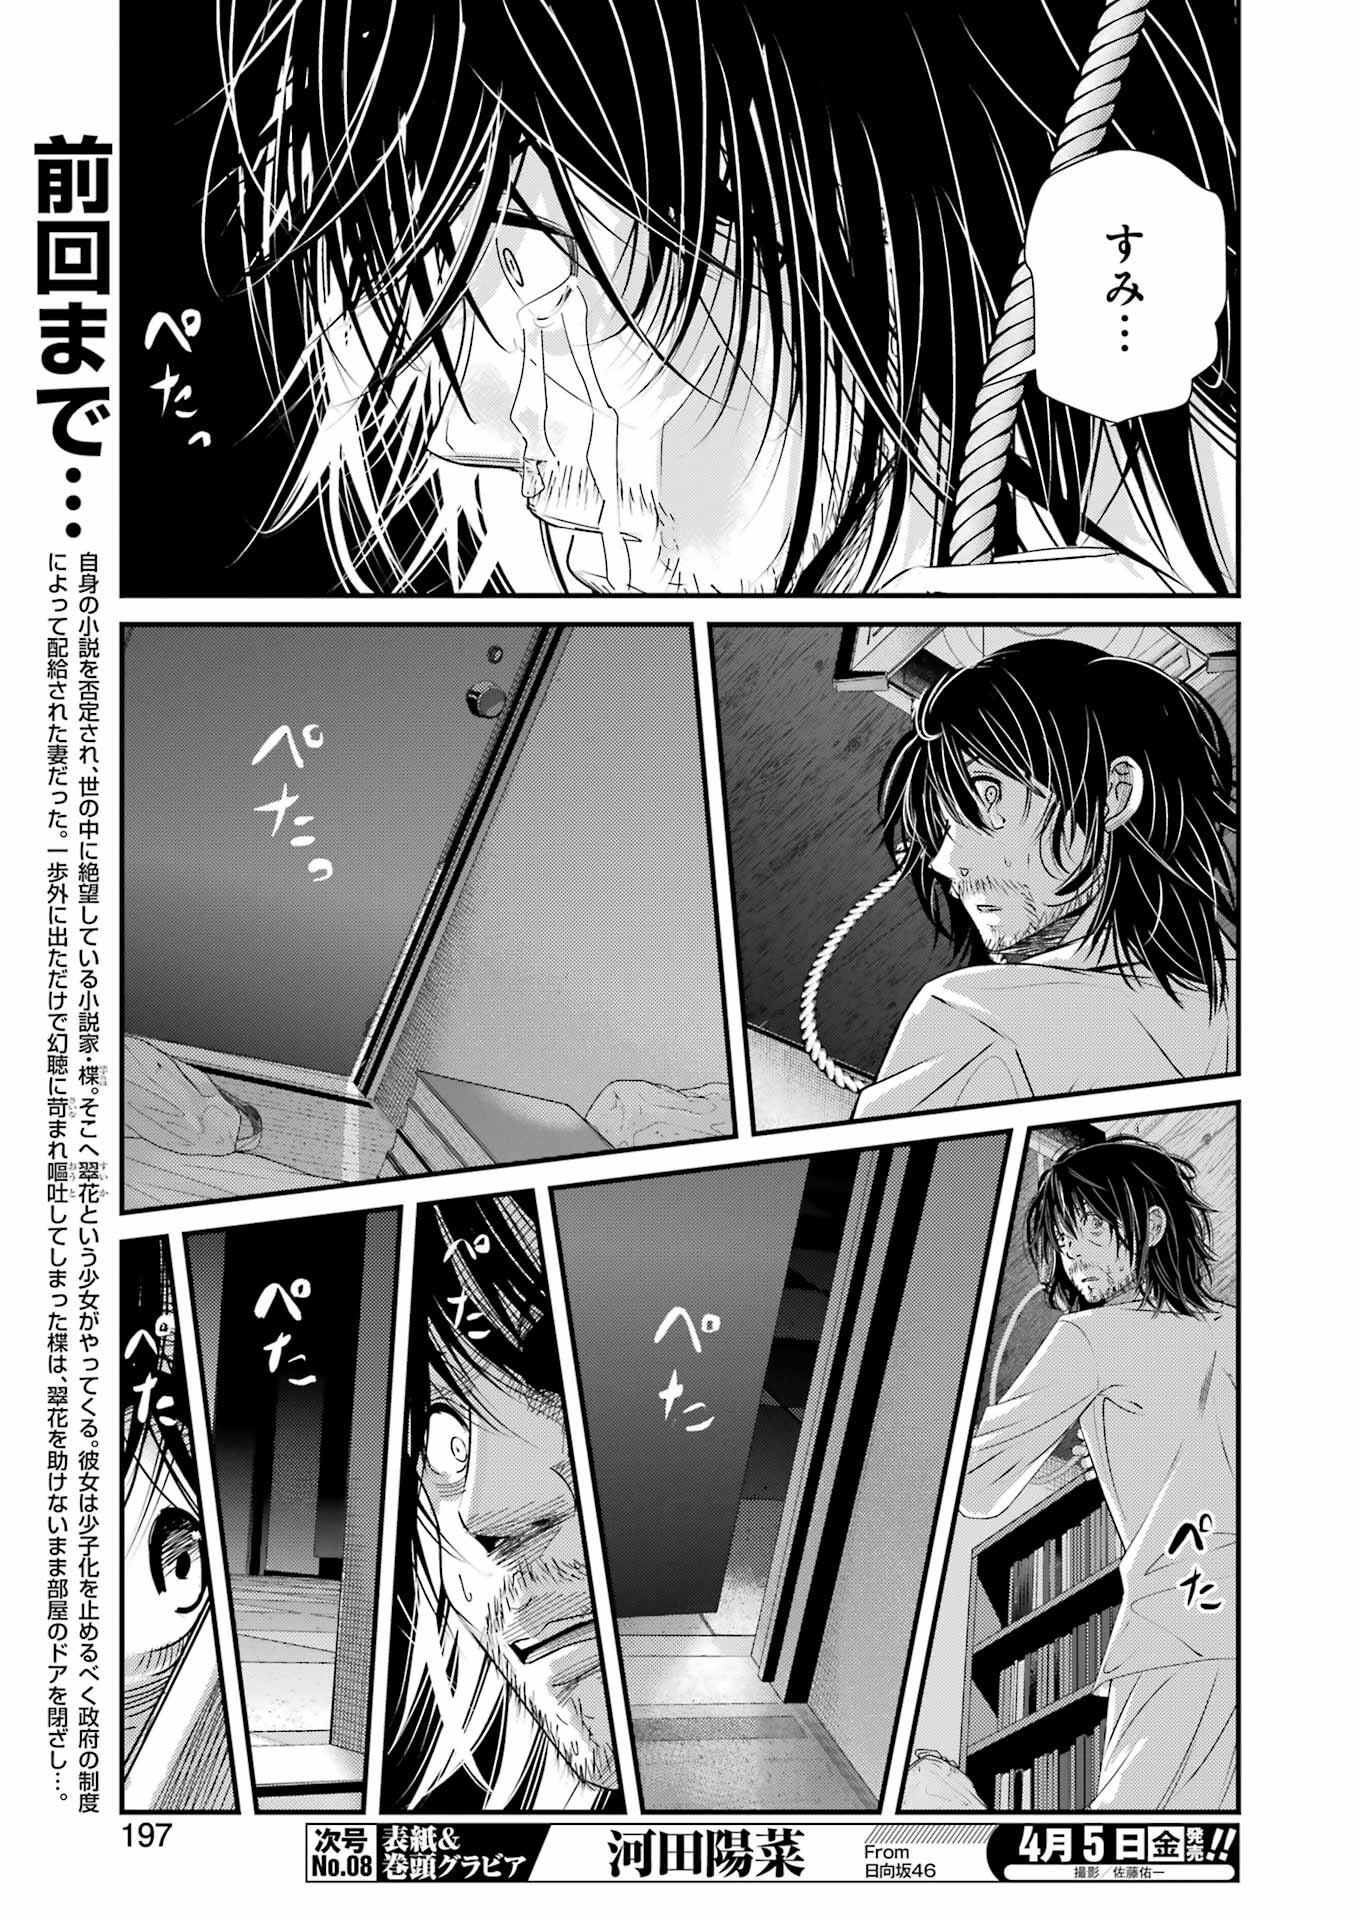 Suika wa Shoushika Tantou - Chapter 7 - Page 3